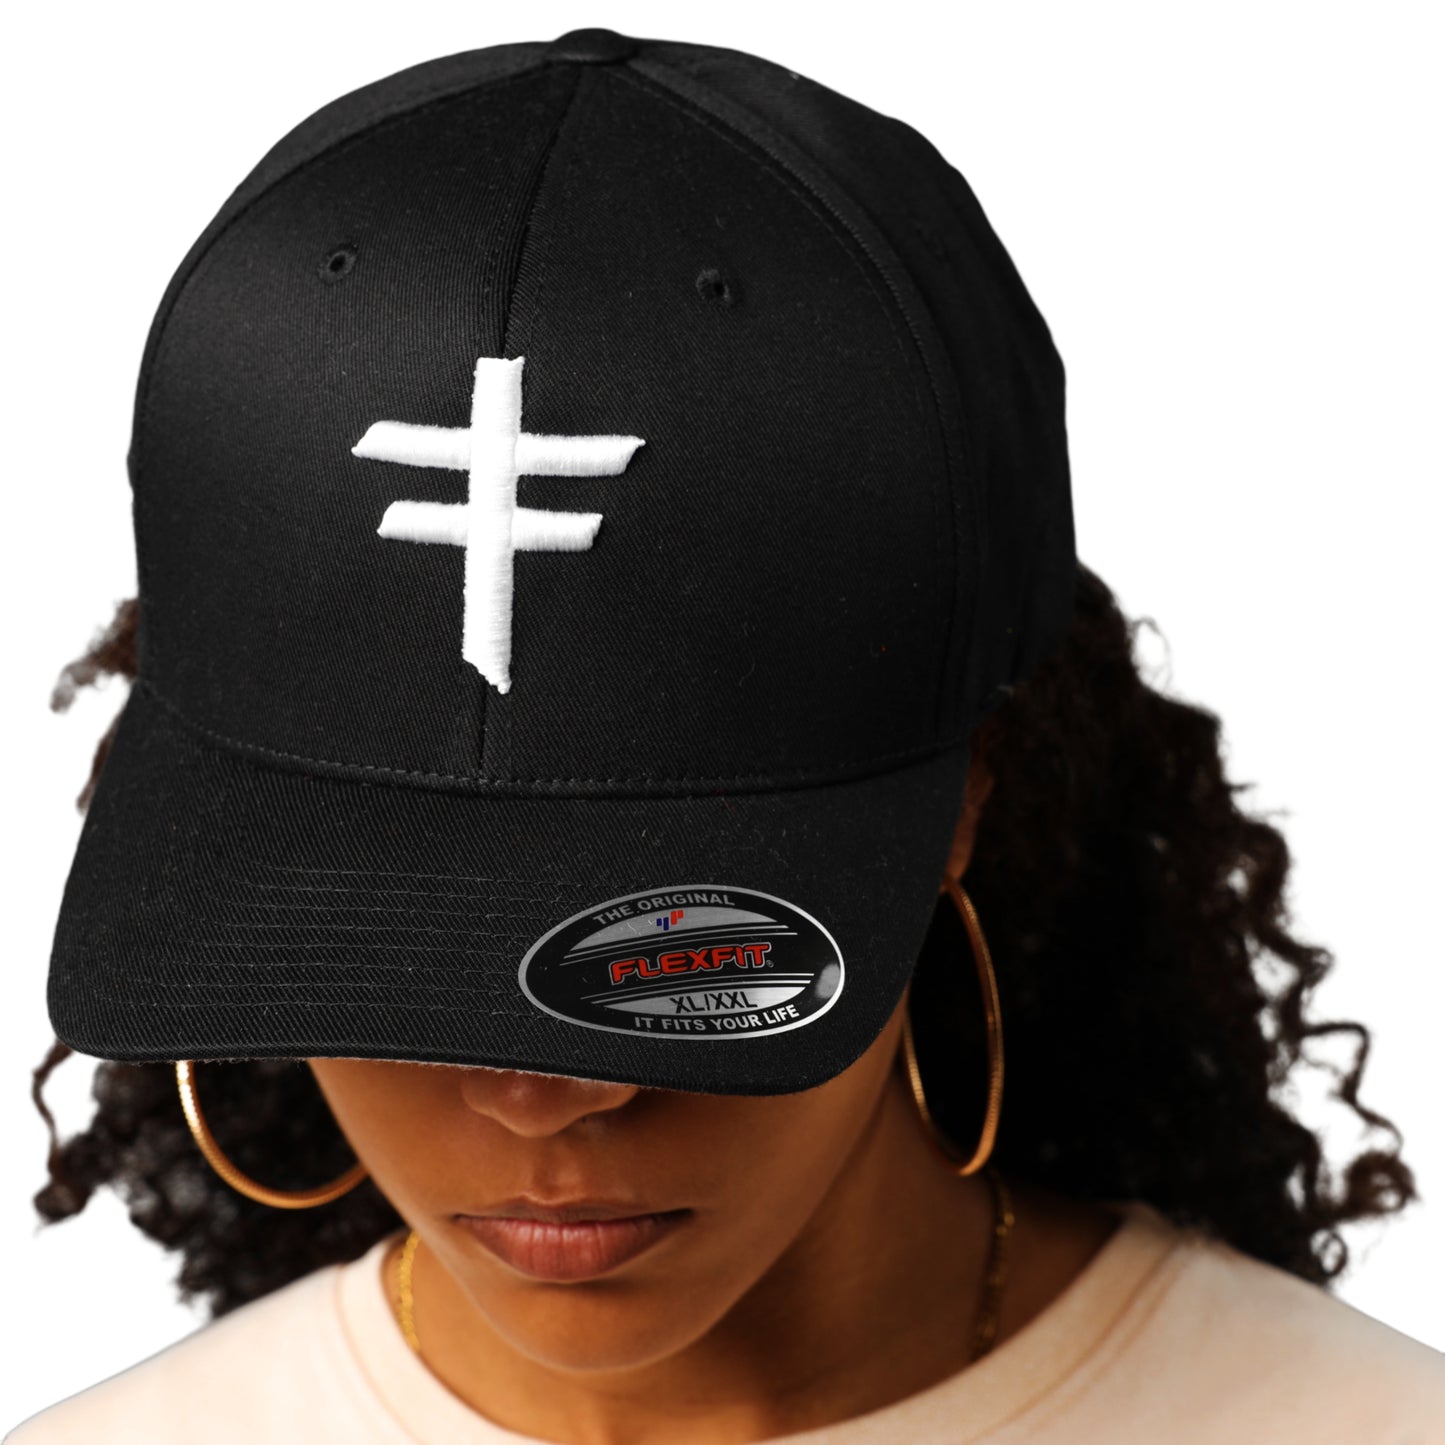 XL - XXL FITTED CAP ( Black & White)